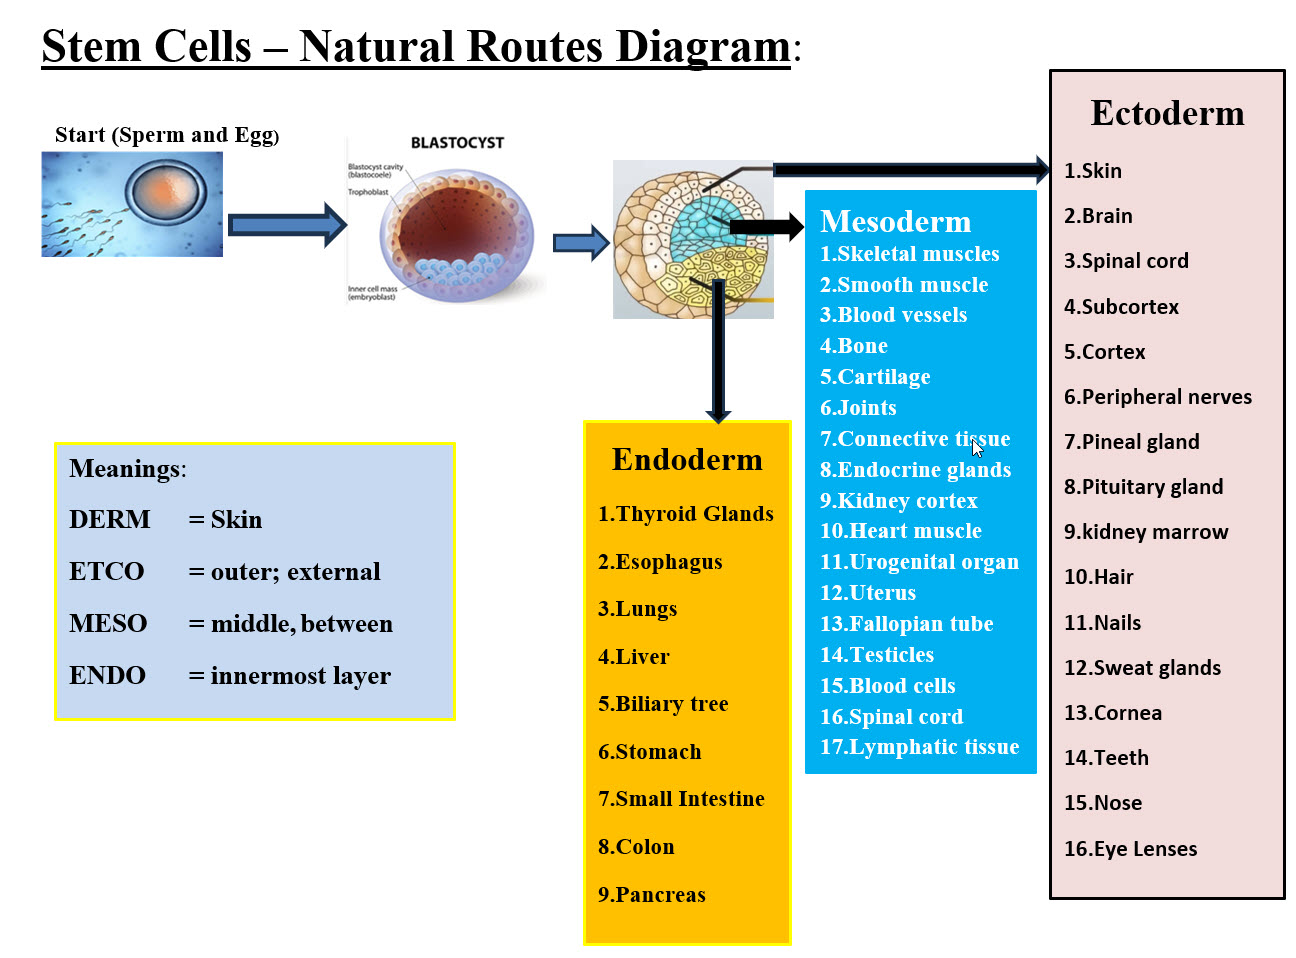 Stem Cells Routes Diagram